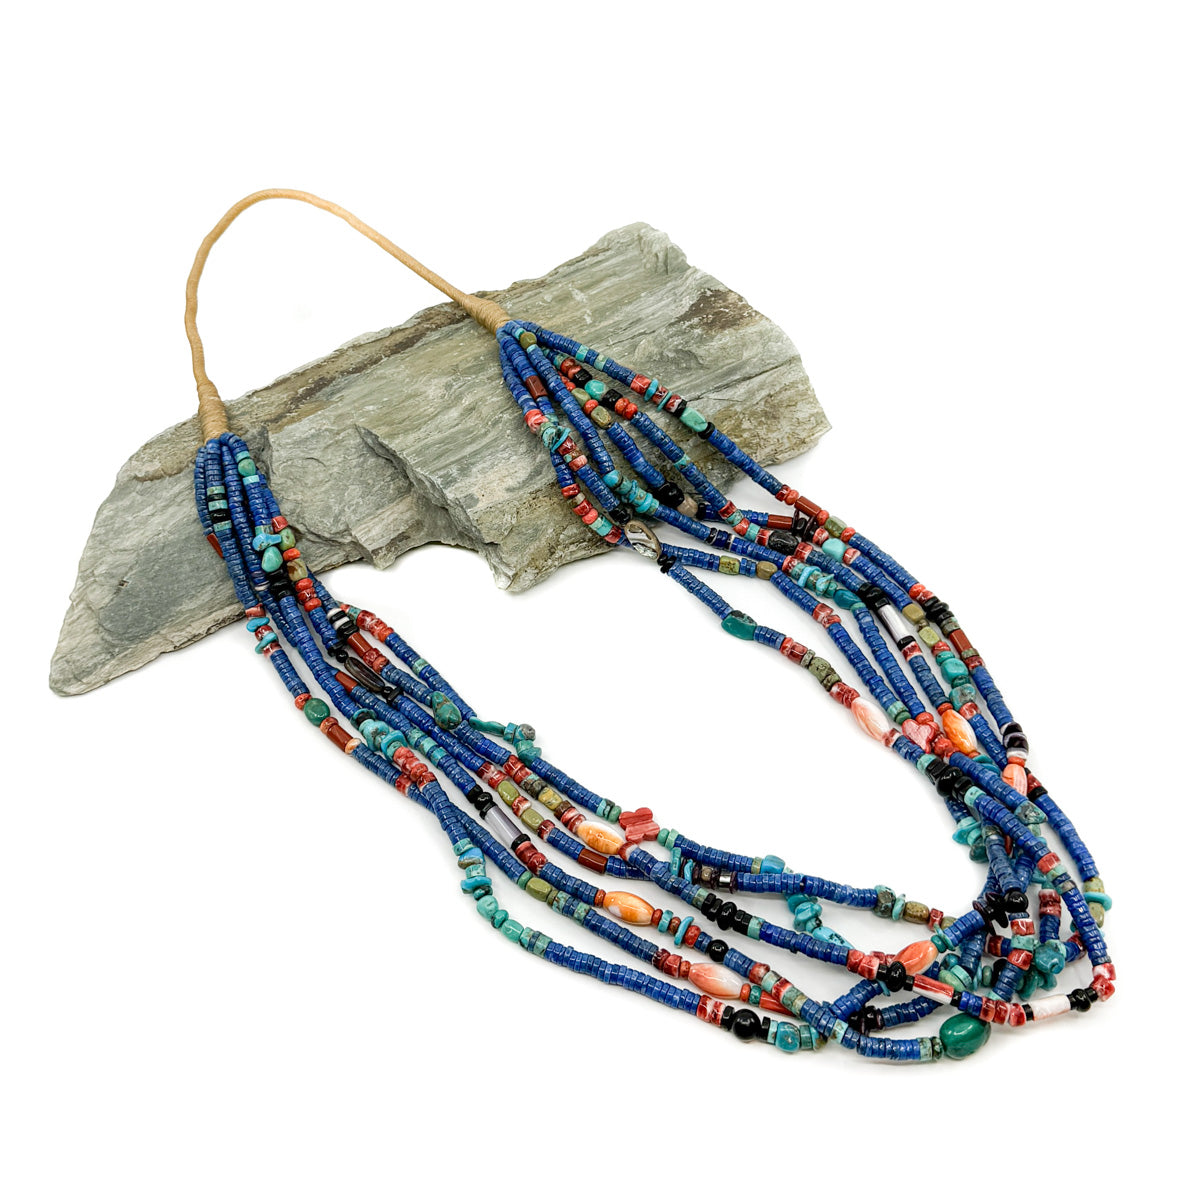 Exquisite Lapis Heishi Multi-Strand Necklace by Daniel Coriz